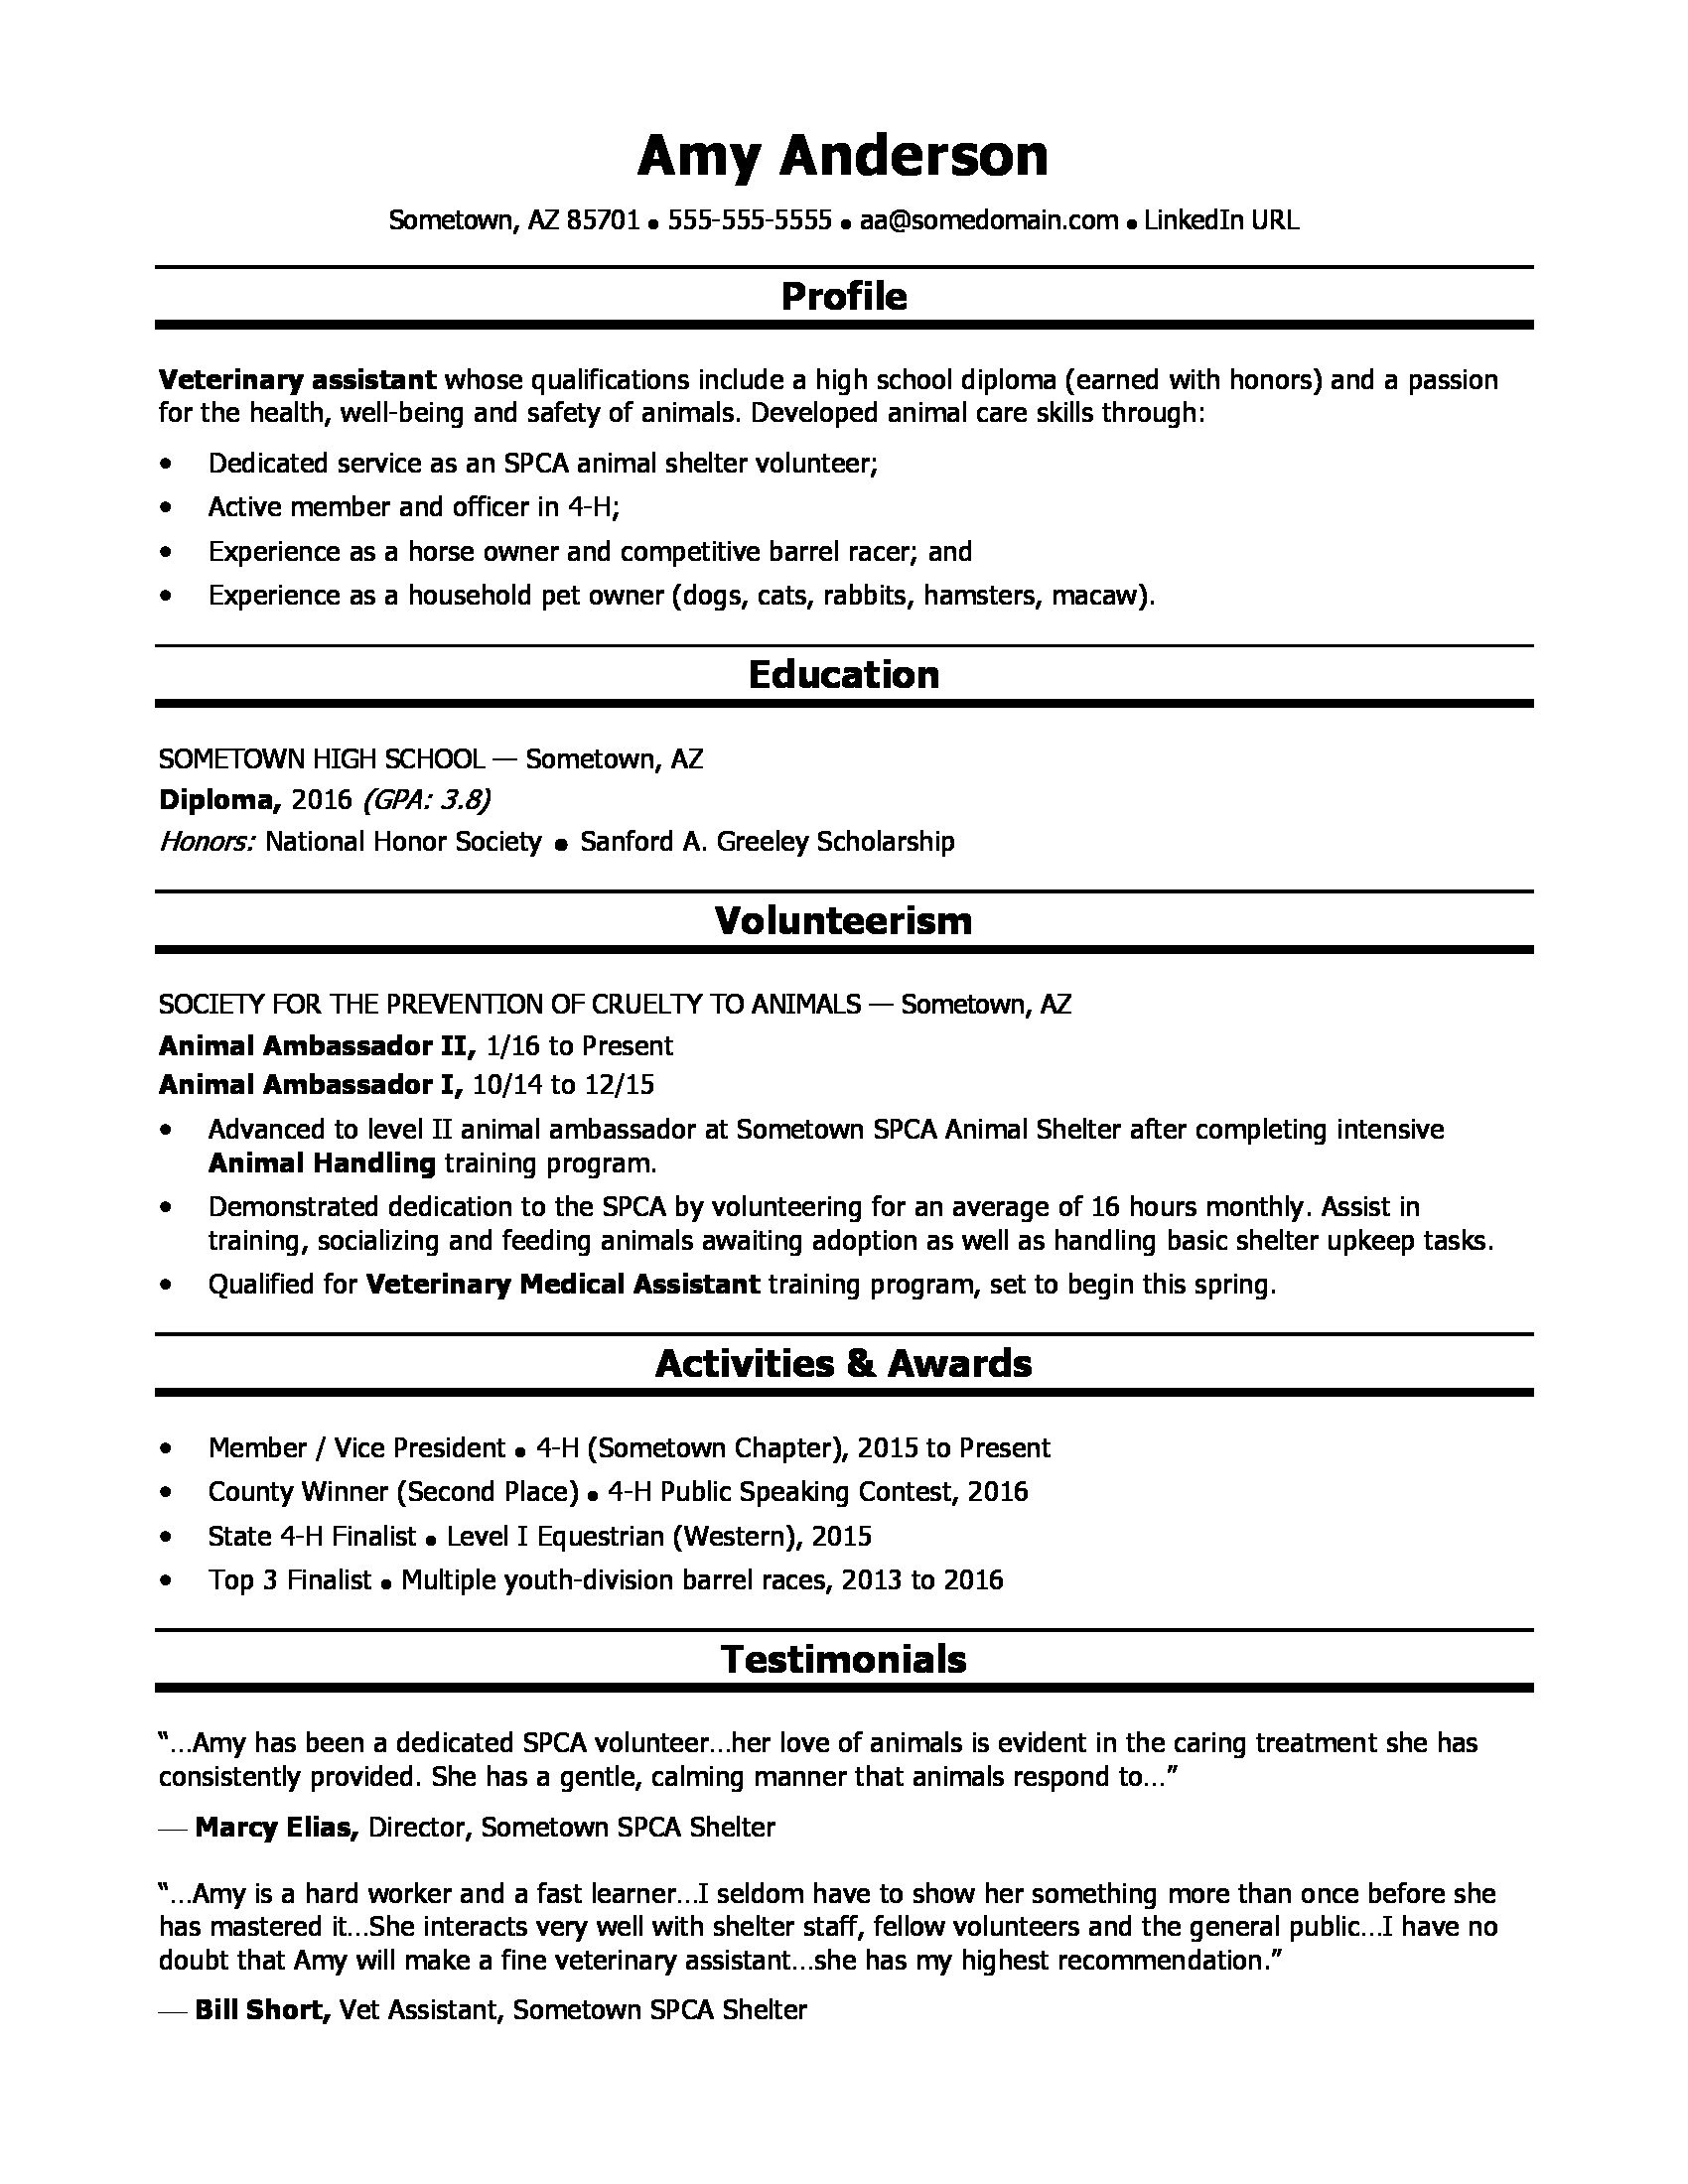 Sample Resume without High School Diploma High School Grad Resume Sample Monster.com